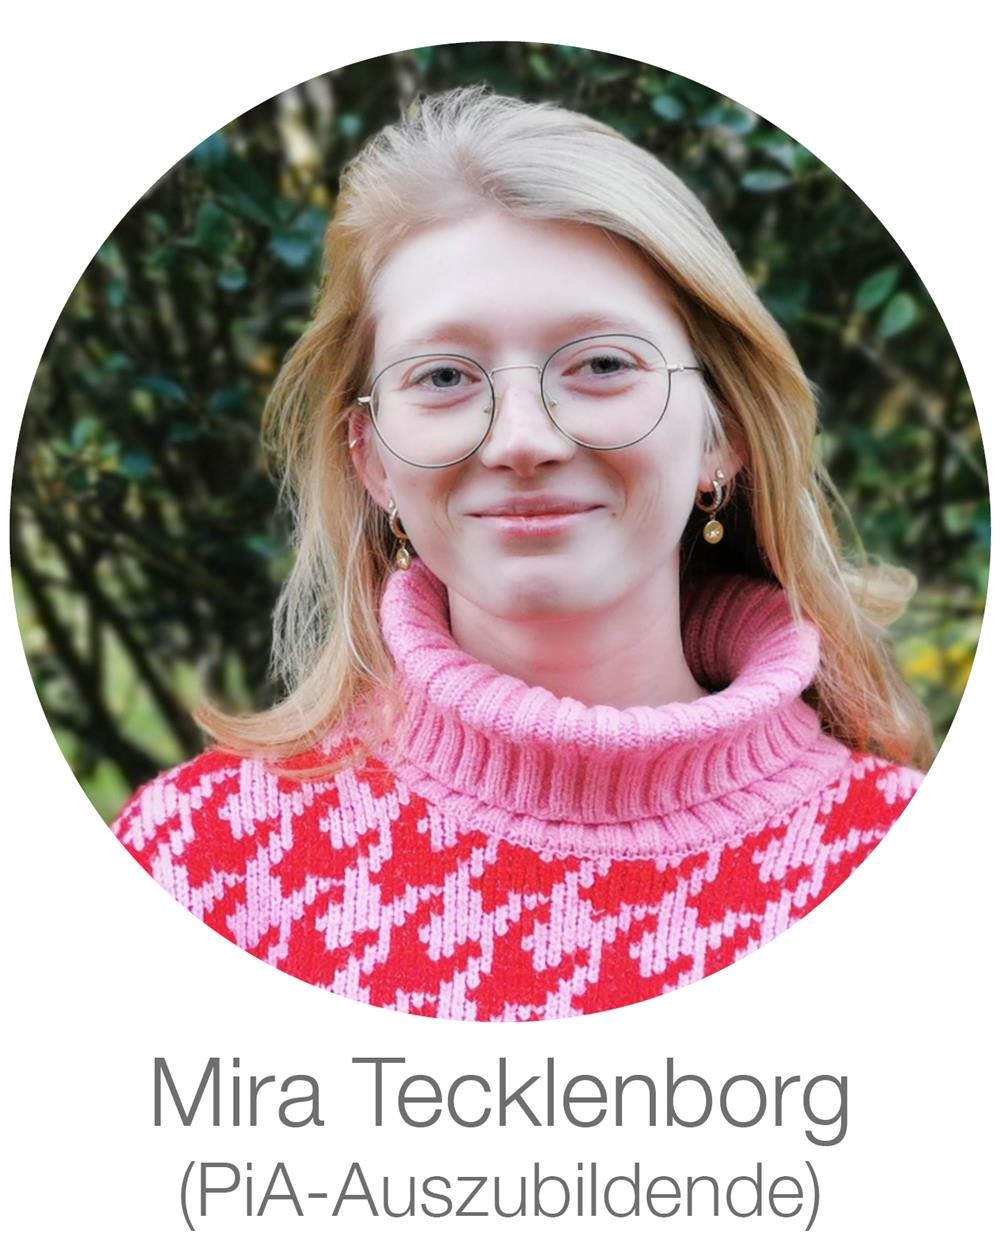 Mira Tecklenborg